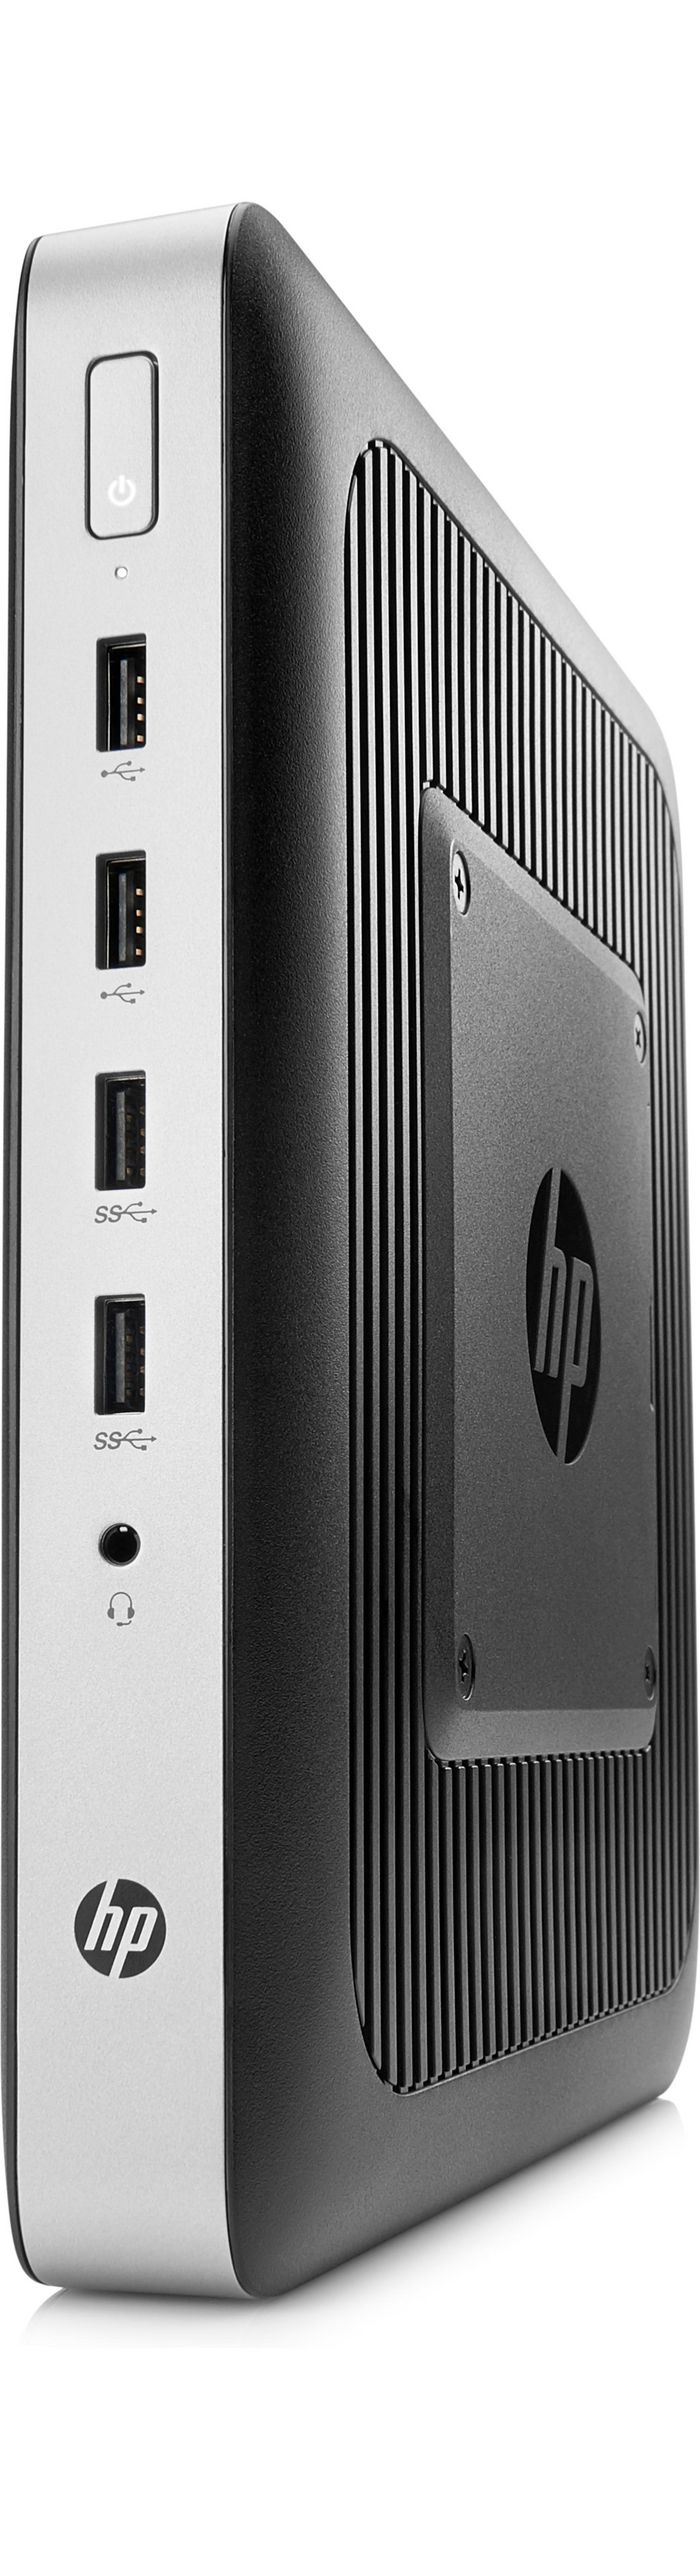 HP T630 2 Ghz Windows Embedded Standard 7E 1.52 Kg Silver, Black Gx-420Gi - W128289290